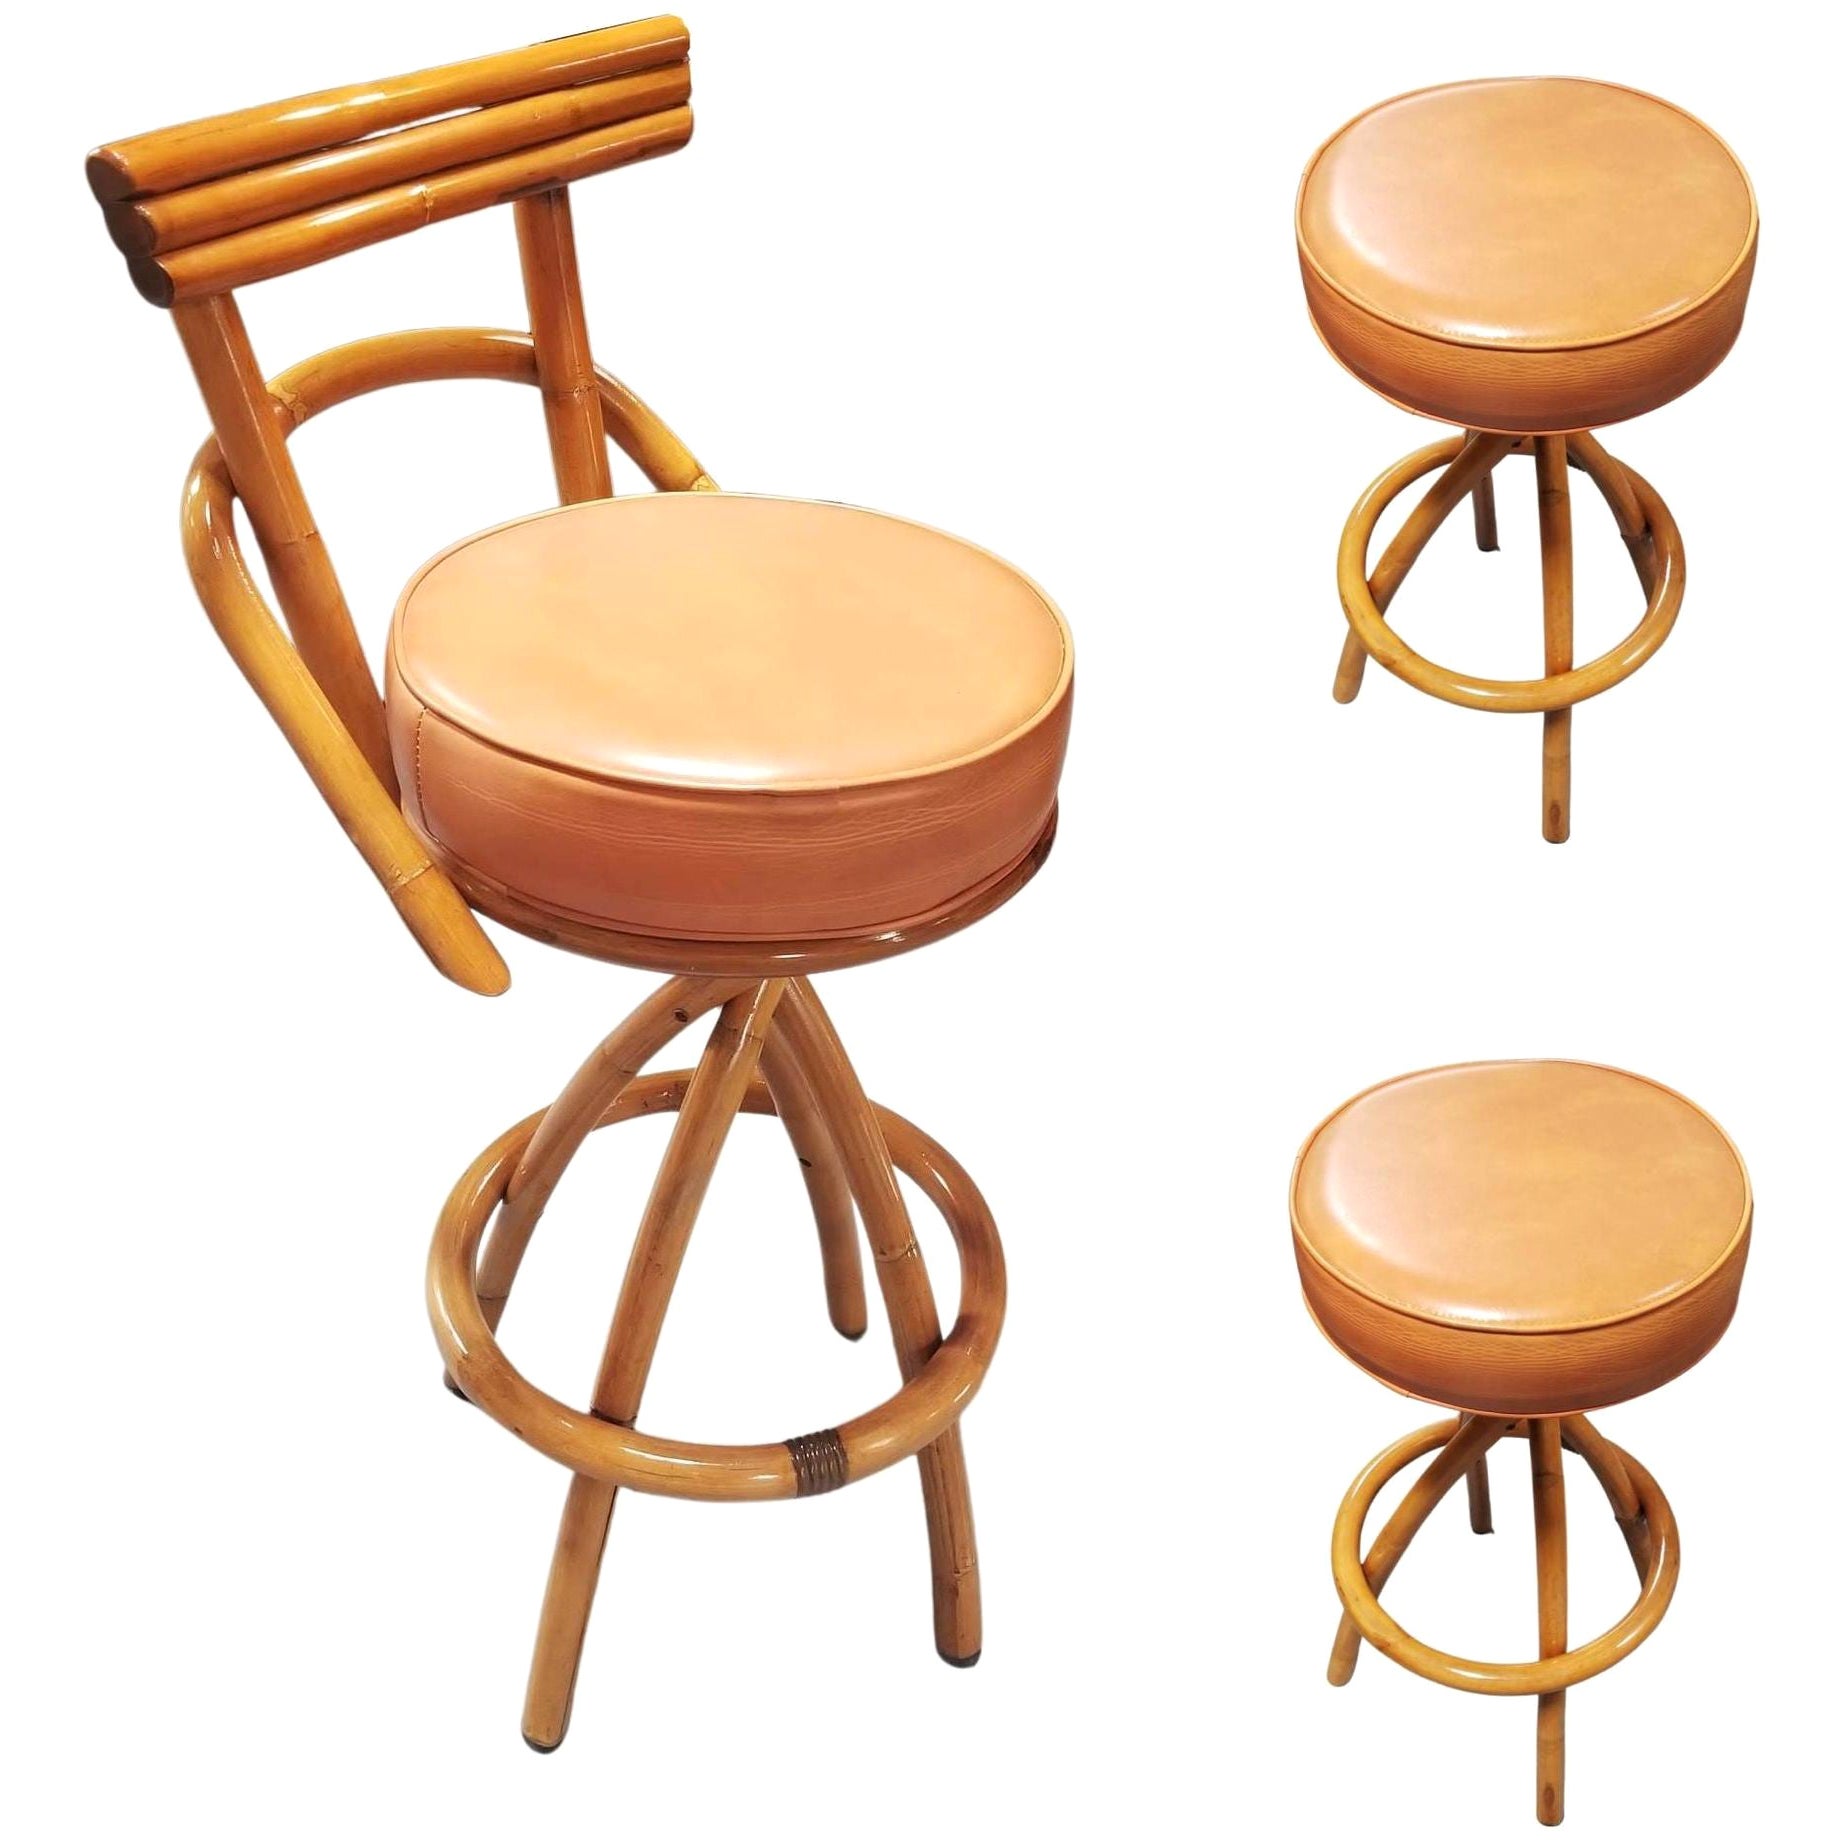 Restored Rattan Spiral Legs Orange Barstool Set of Three with Swivel Seats